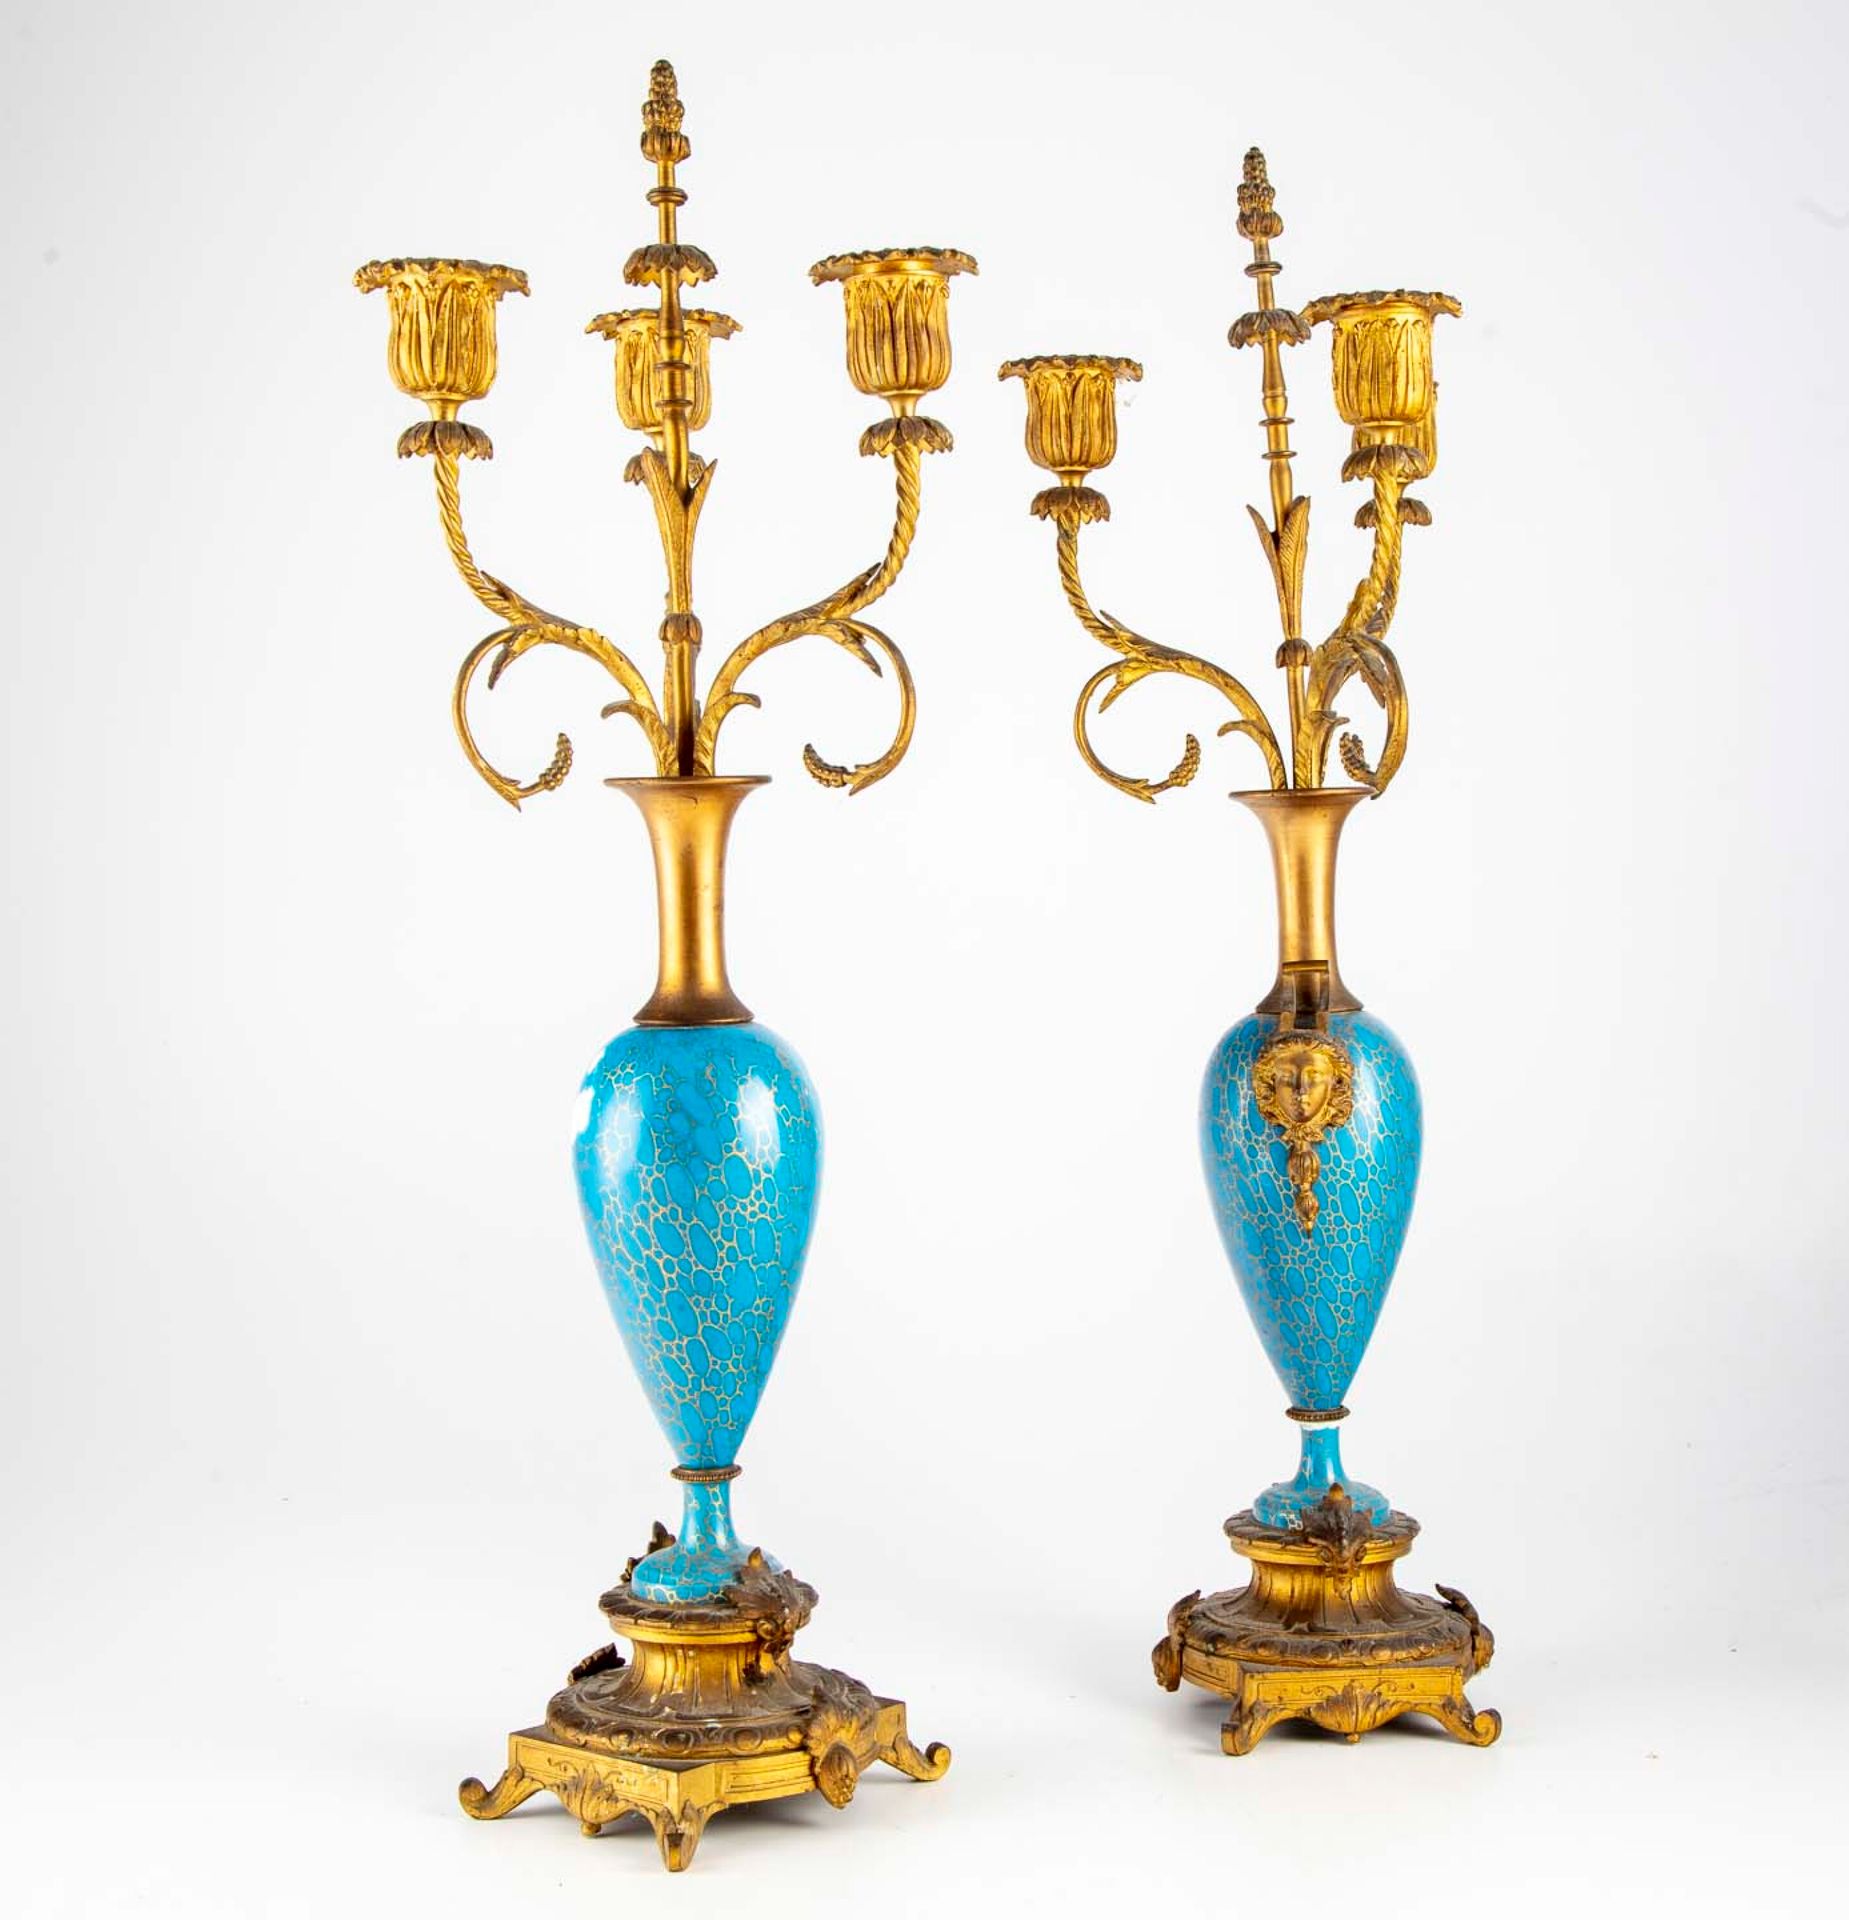 Null 一对瓷器和鎏金黄铜火把

拿破仑三世

H.52厘米

磨损的